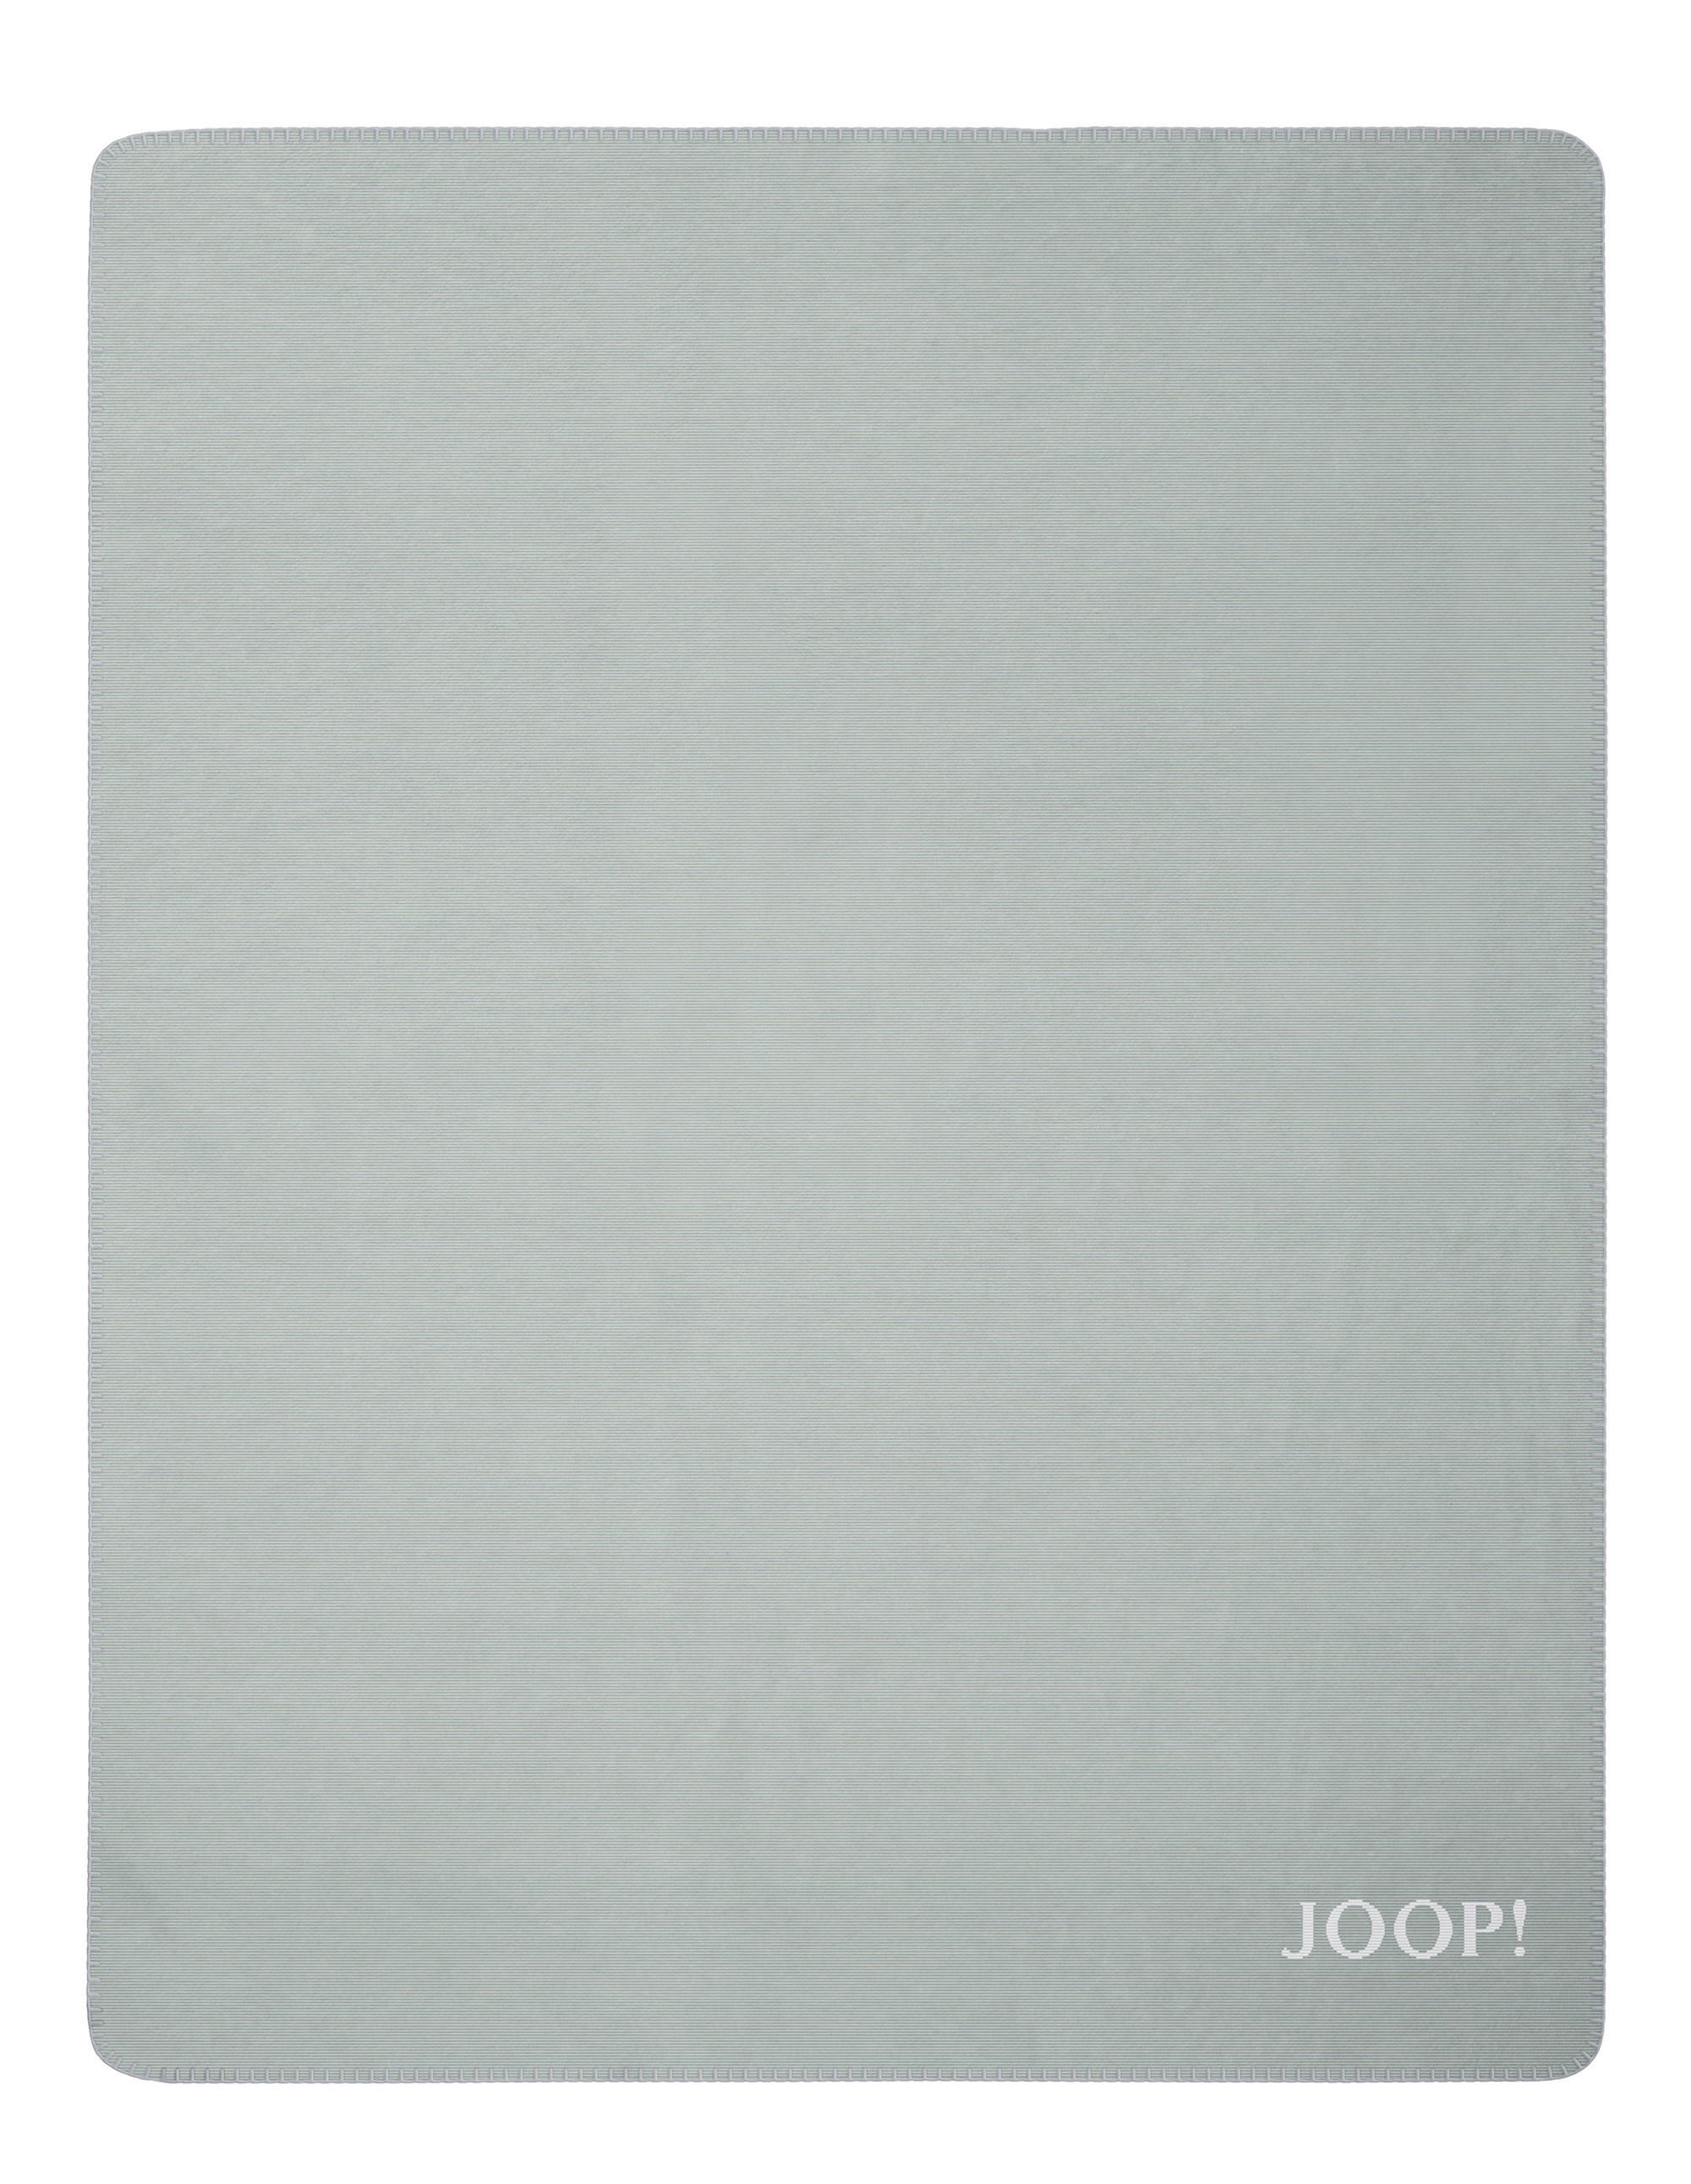 WOHNDECKE Melange Doubleface 150/200 cm Naturfarben, Jadegrün  - Jadegrün/Naturfarben, Design, Textil (150/200cm) - Joop!